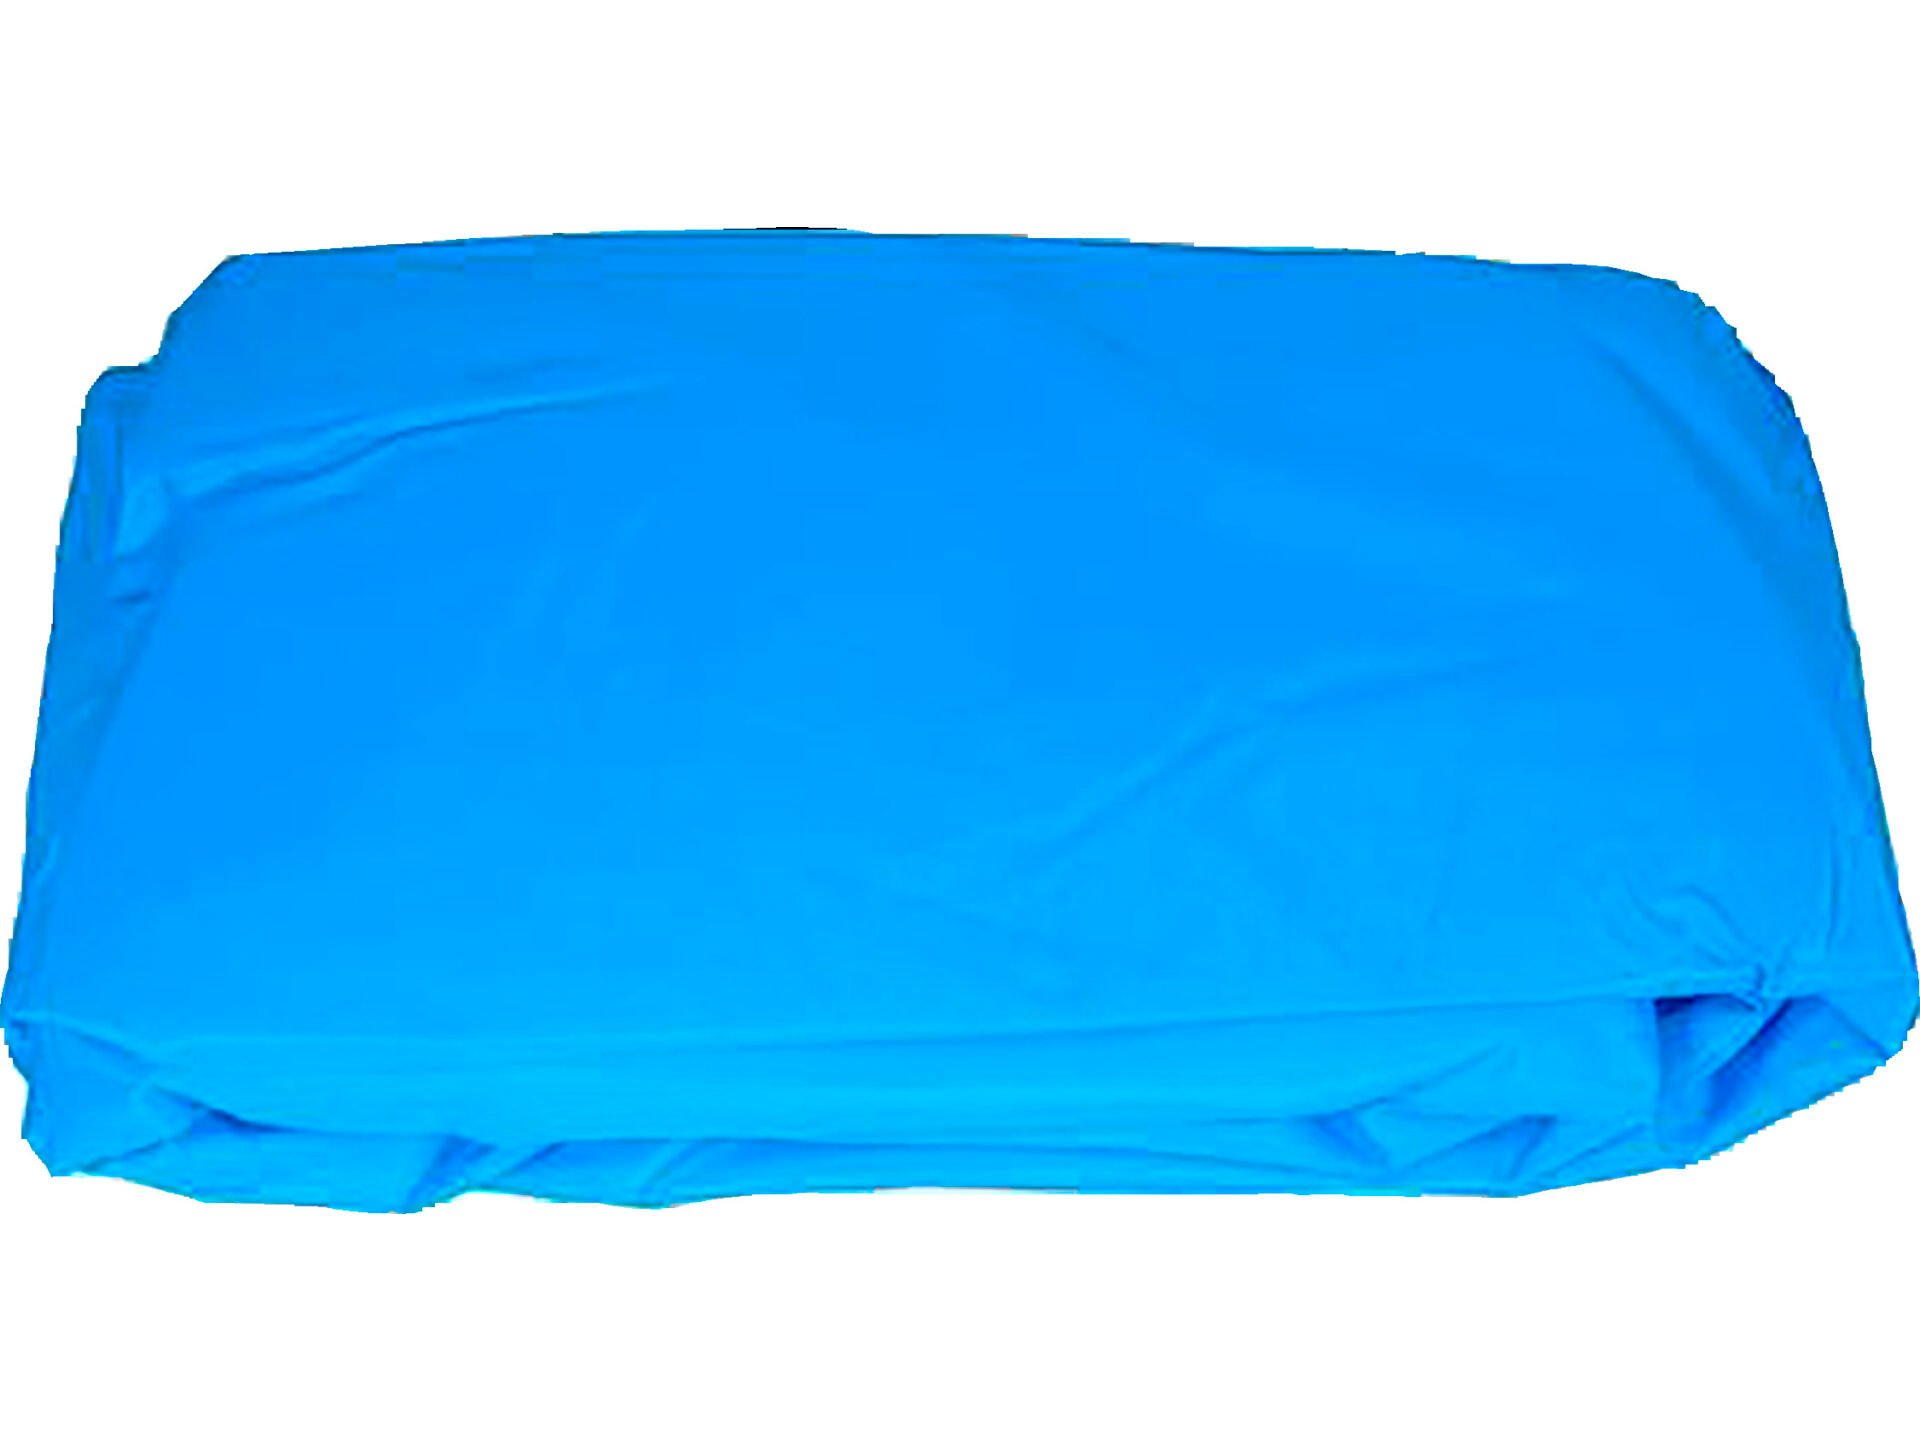 Ubbink liner piscine 505x350 cm bleu